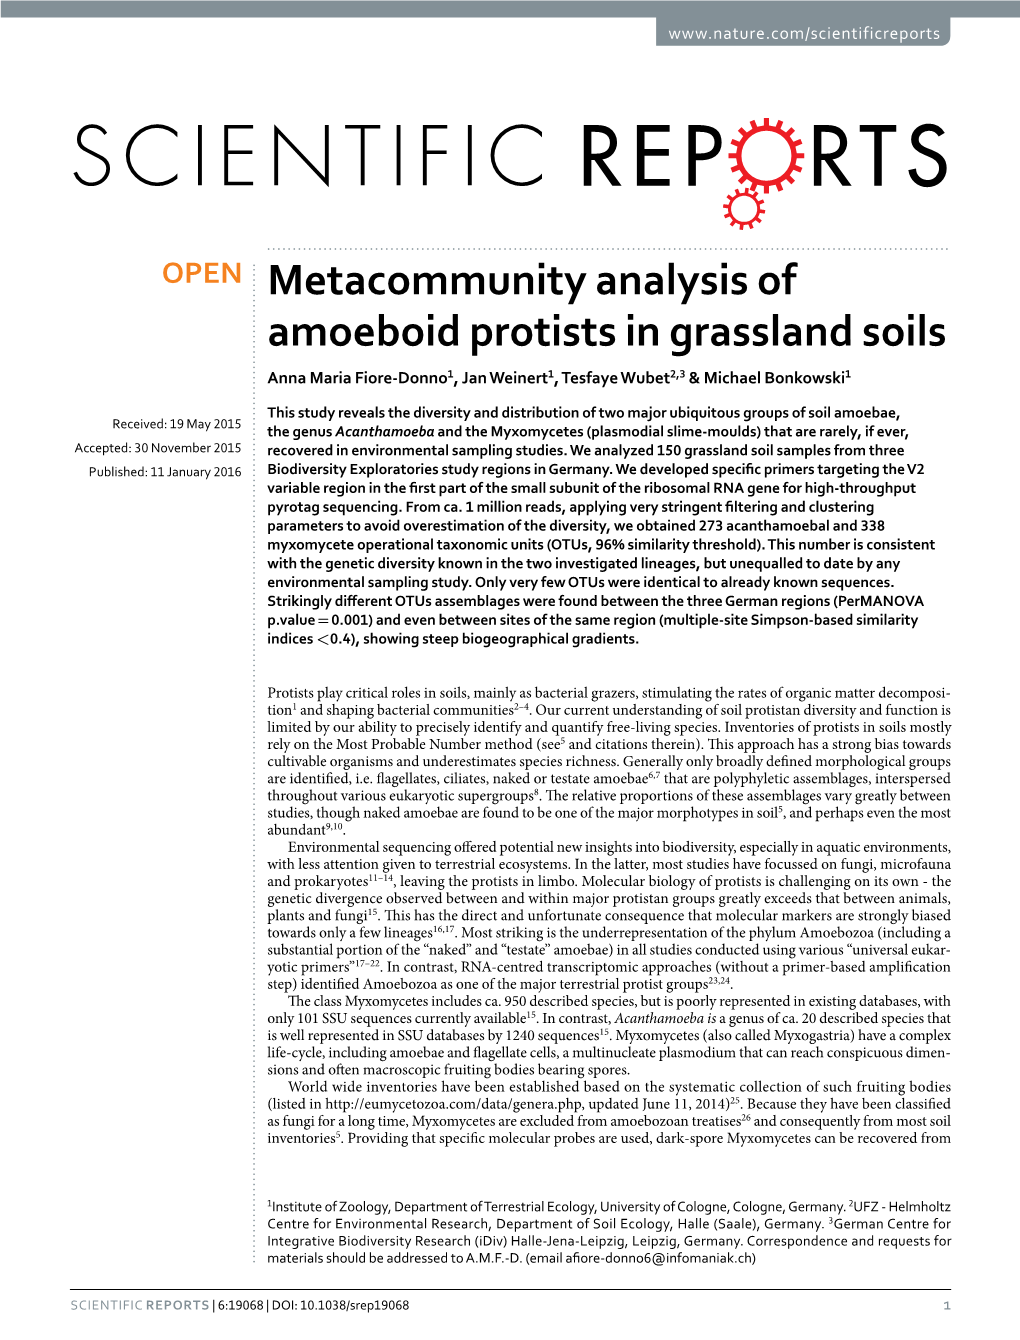 Metacommunity Analysis of Amoeboid Protists in Grassland Soils Anna Maria Fiore-Donno1, Jan Weinert1, Tesfaye Wubet2,3 & Michael Bonkowski1